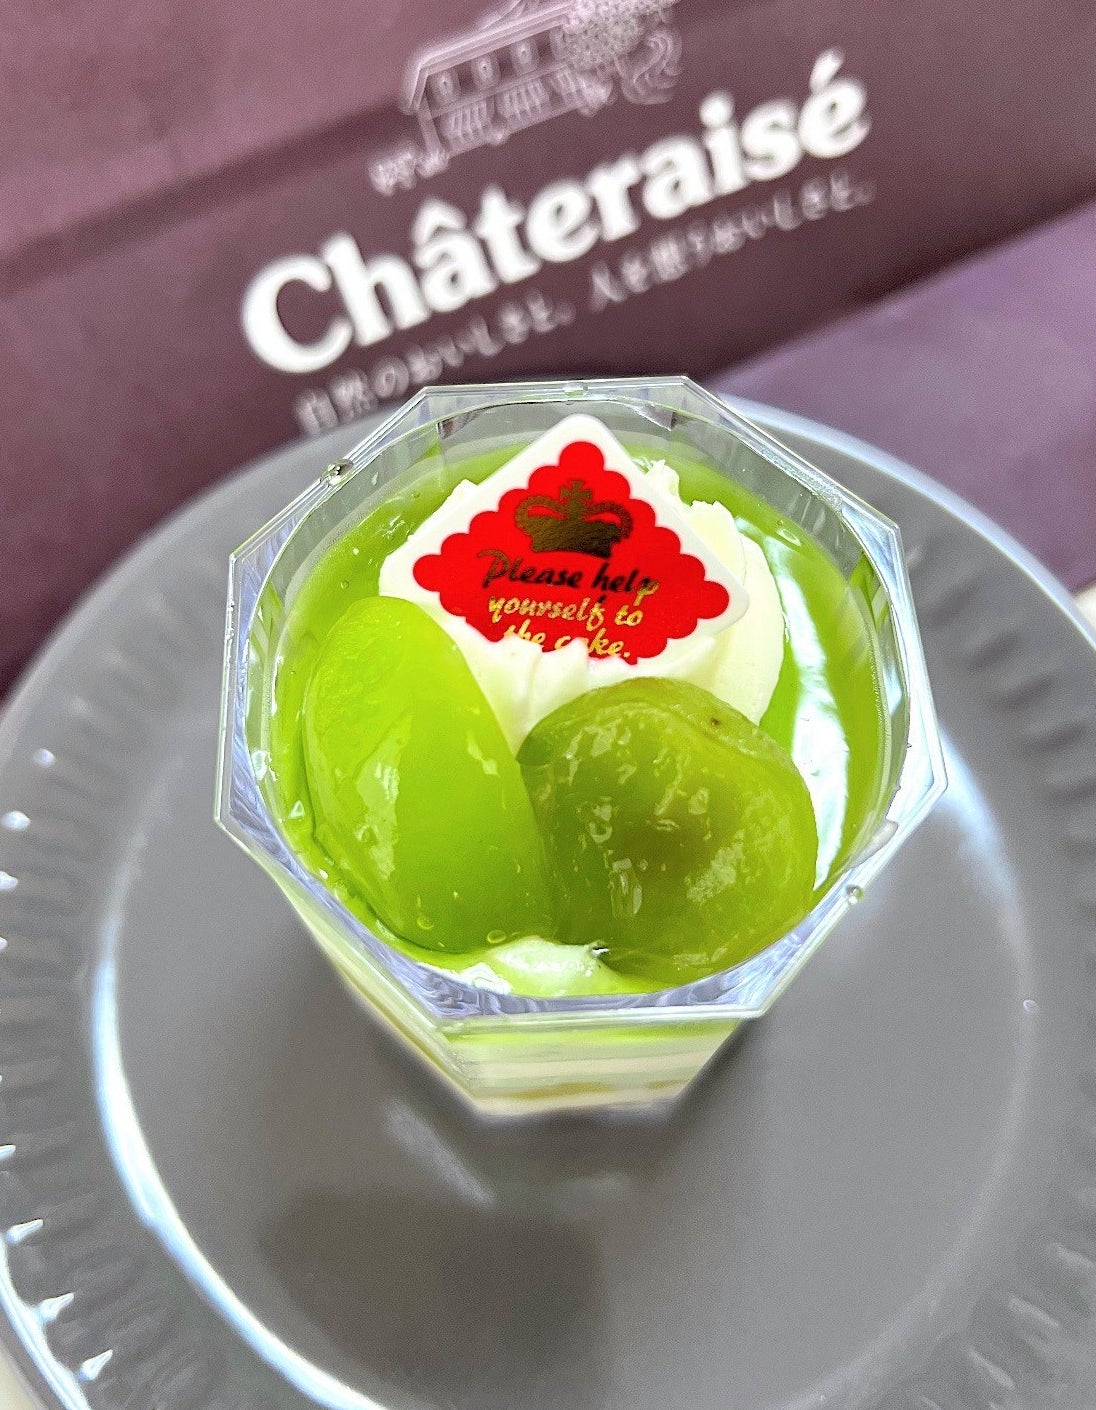 Châteraisé（シャトレーゼ）のオススメのスイーツ「山梨県産シャインマスカットのカップデザート」